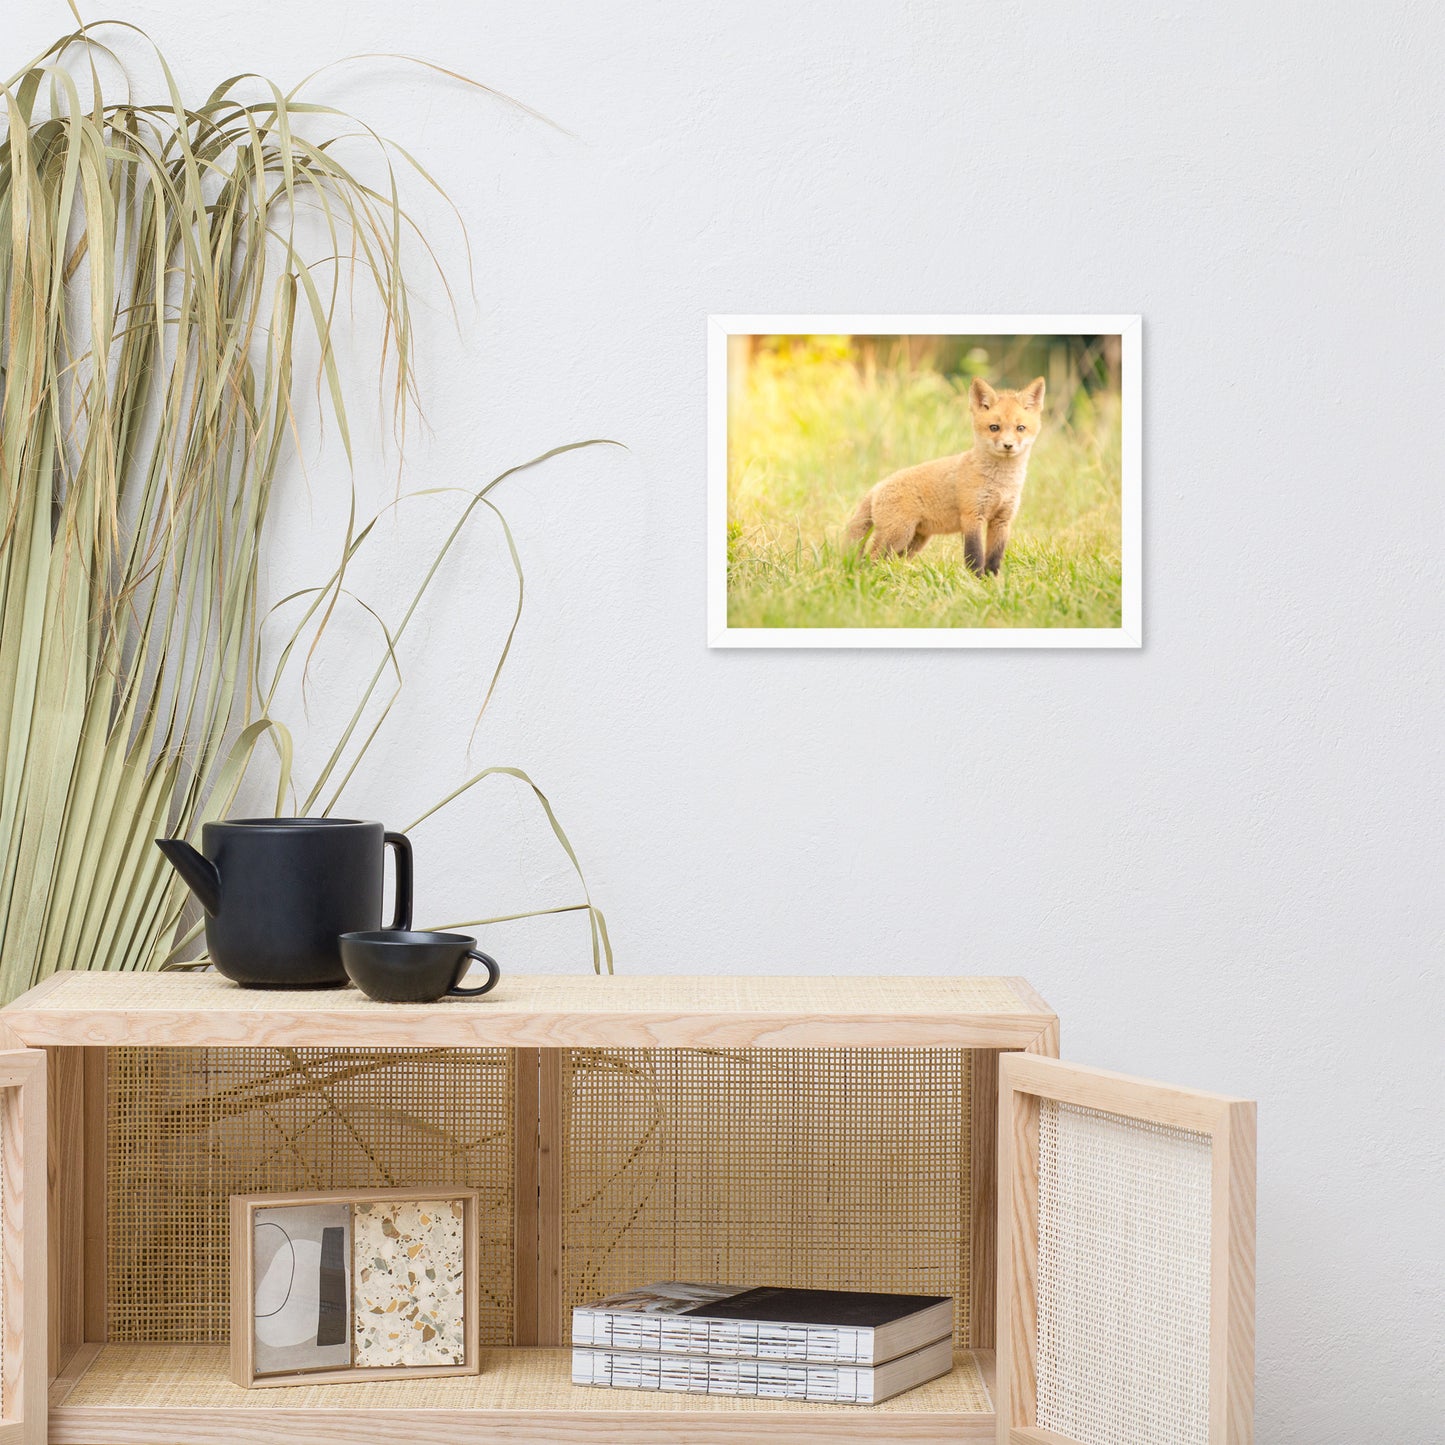 Hanging Art Above Crib: Baby Red Fox in the Sun - Animal / Wildlife / Nature Artwork - Wall Decor - Framed Wall Art Print